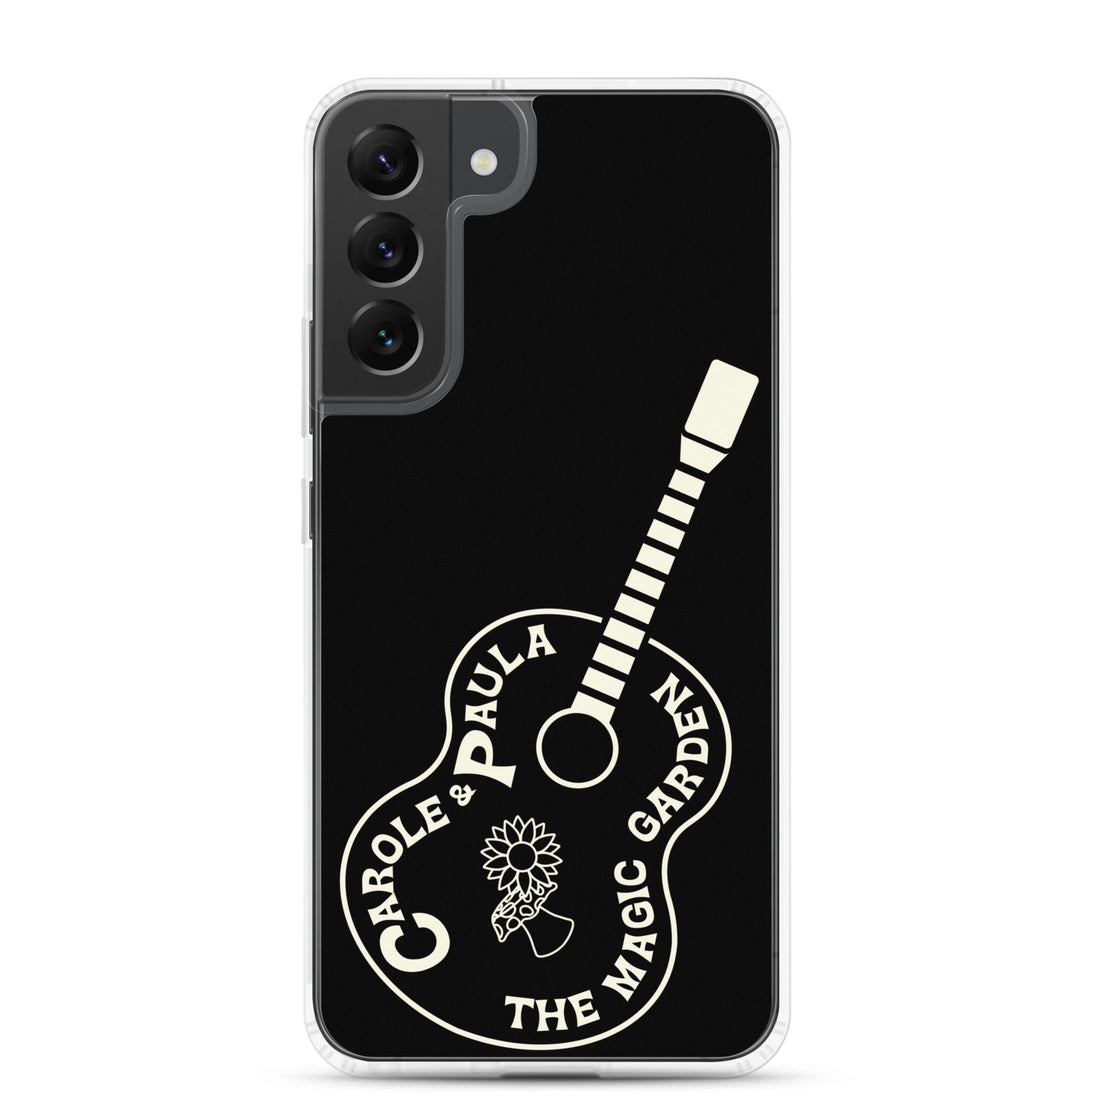 TMG Guitar Samsung Phone Cover, Black